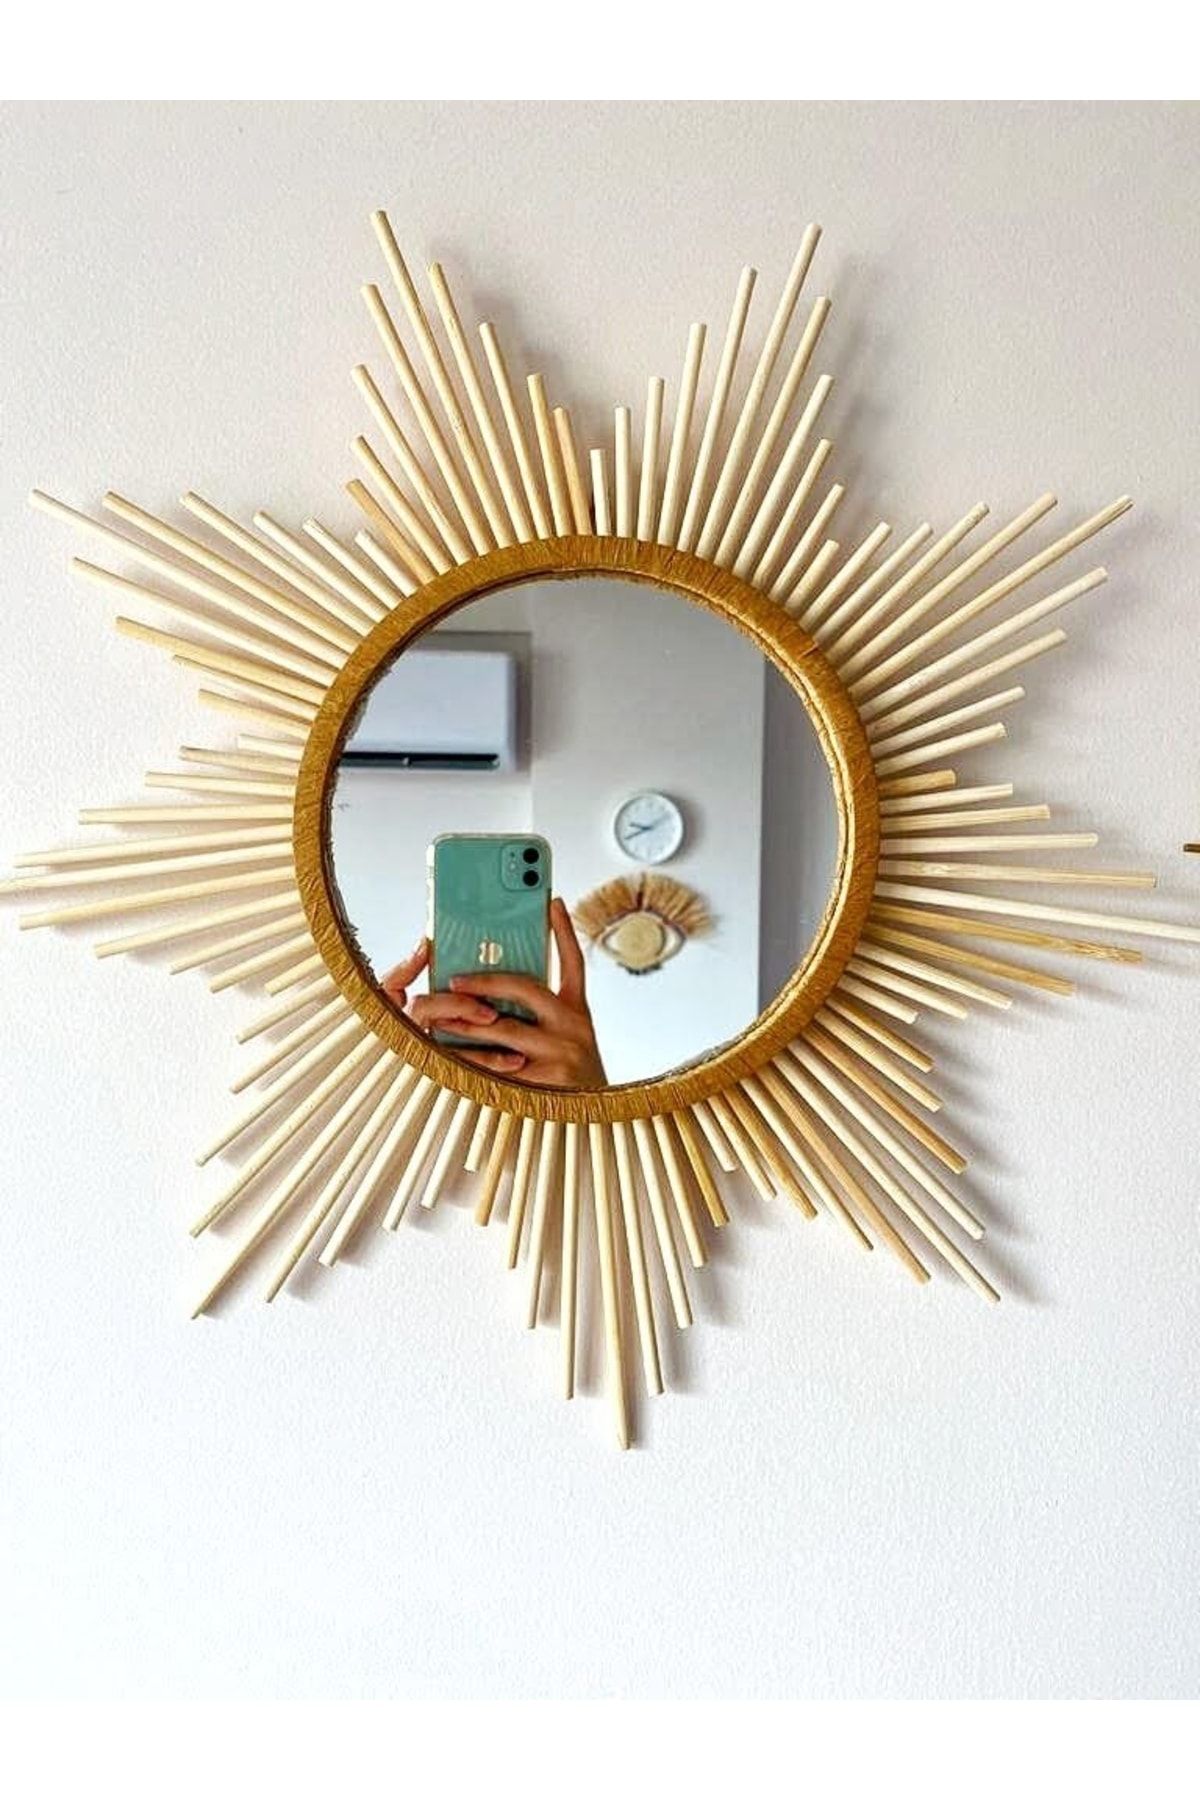 Boncukafası Star Bambu Ayna Duvar Aynası Konsol Ayna Çocuk Odası 40x20